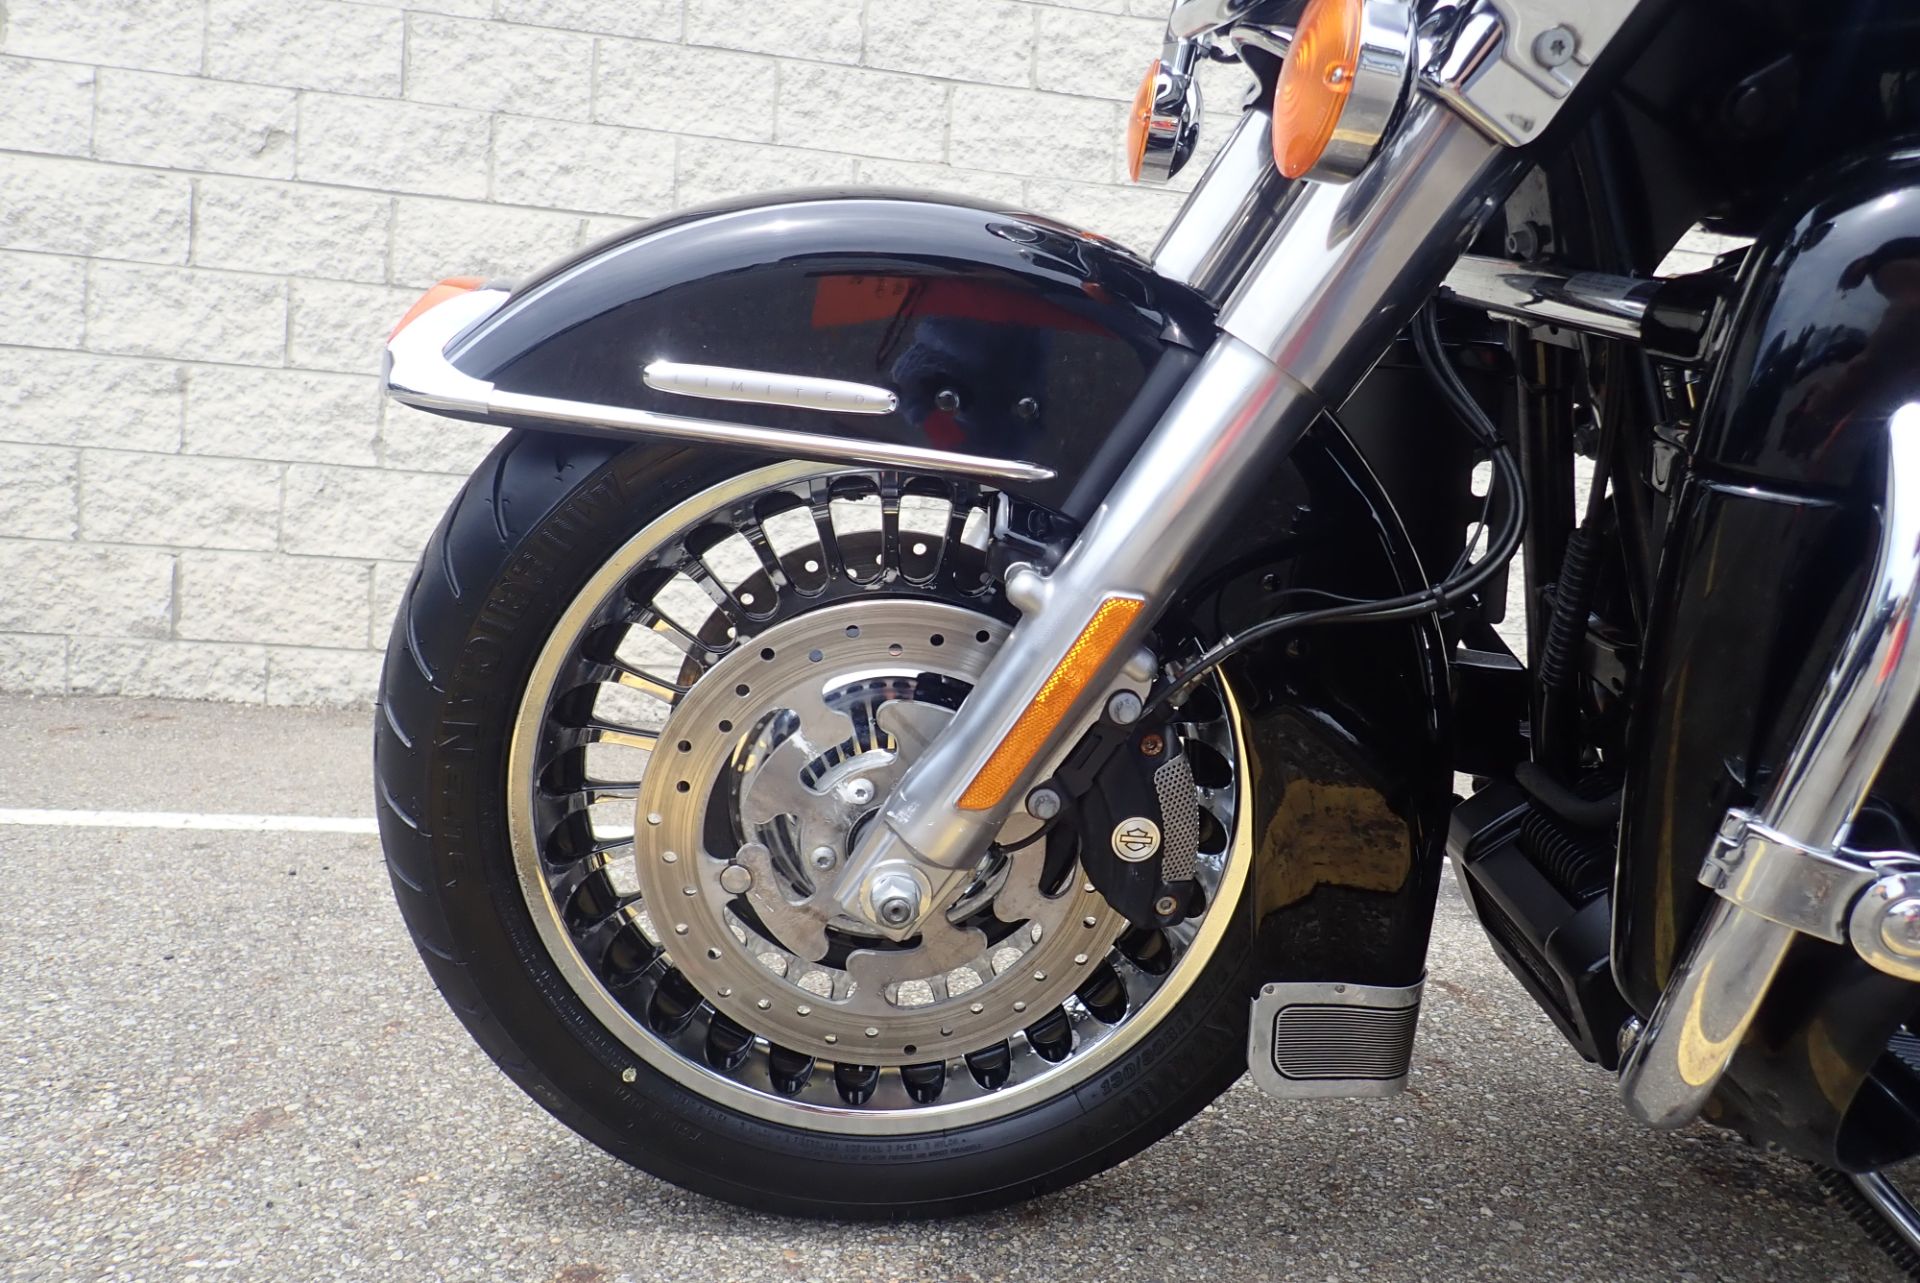 2011 Harley-Davidson Electra Glide® Ultra Limited in Massillon, Ohio - Photo 10